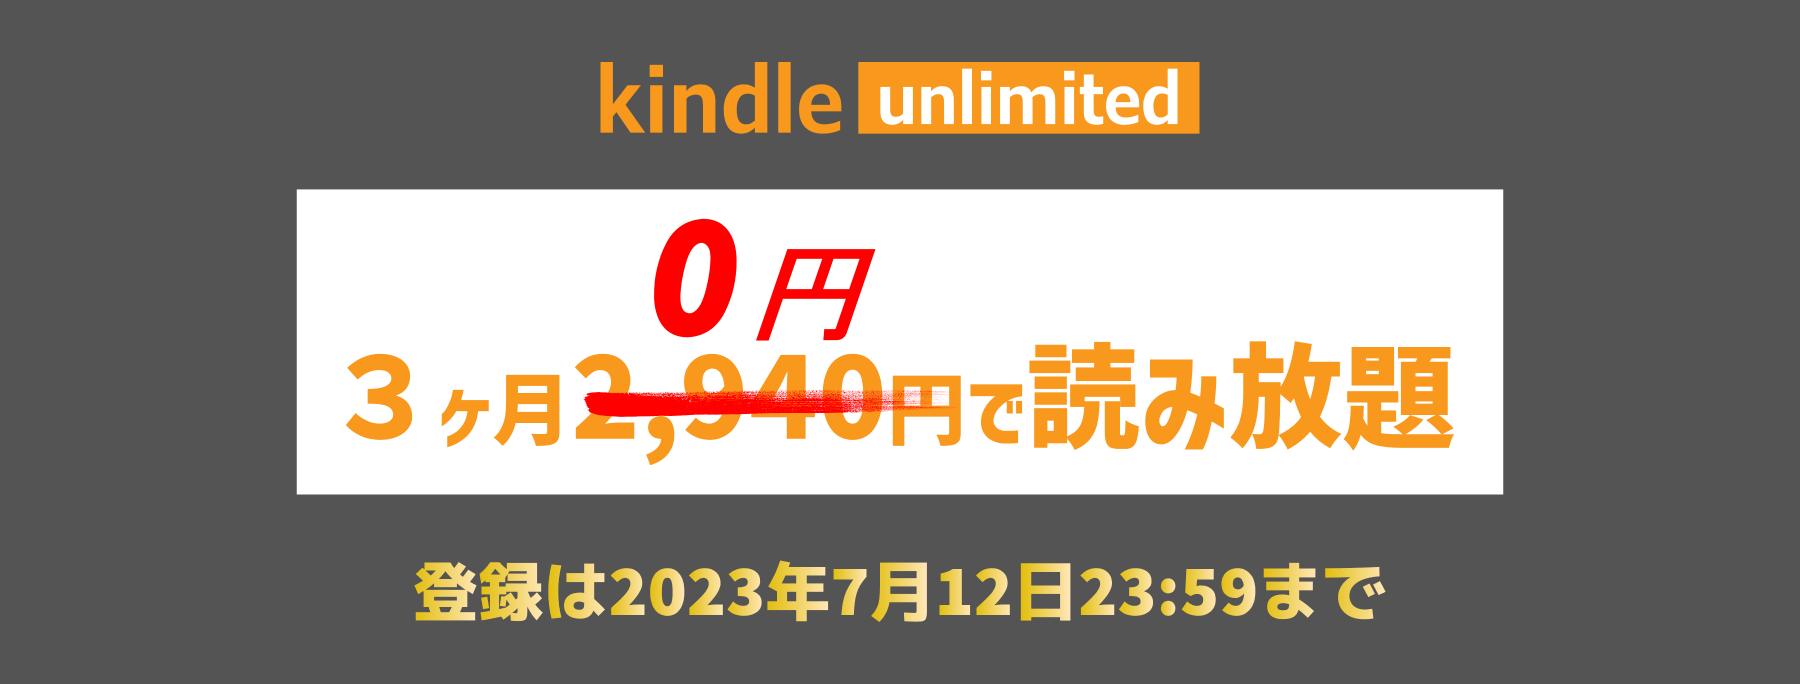 kindle Unlimited Sale 2023 セール